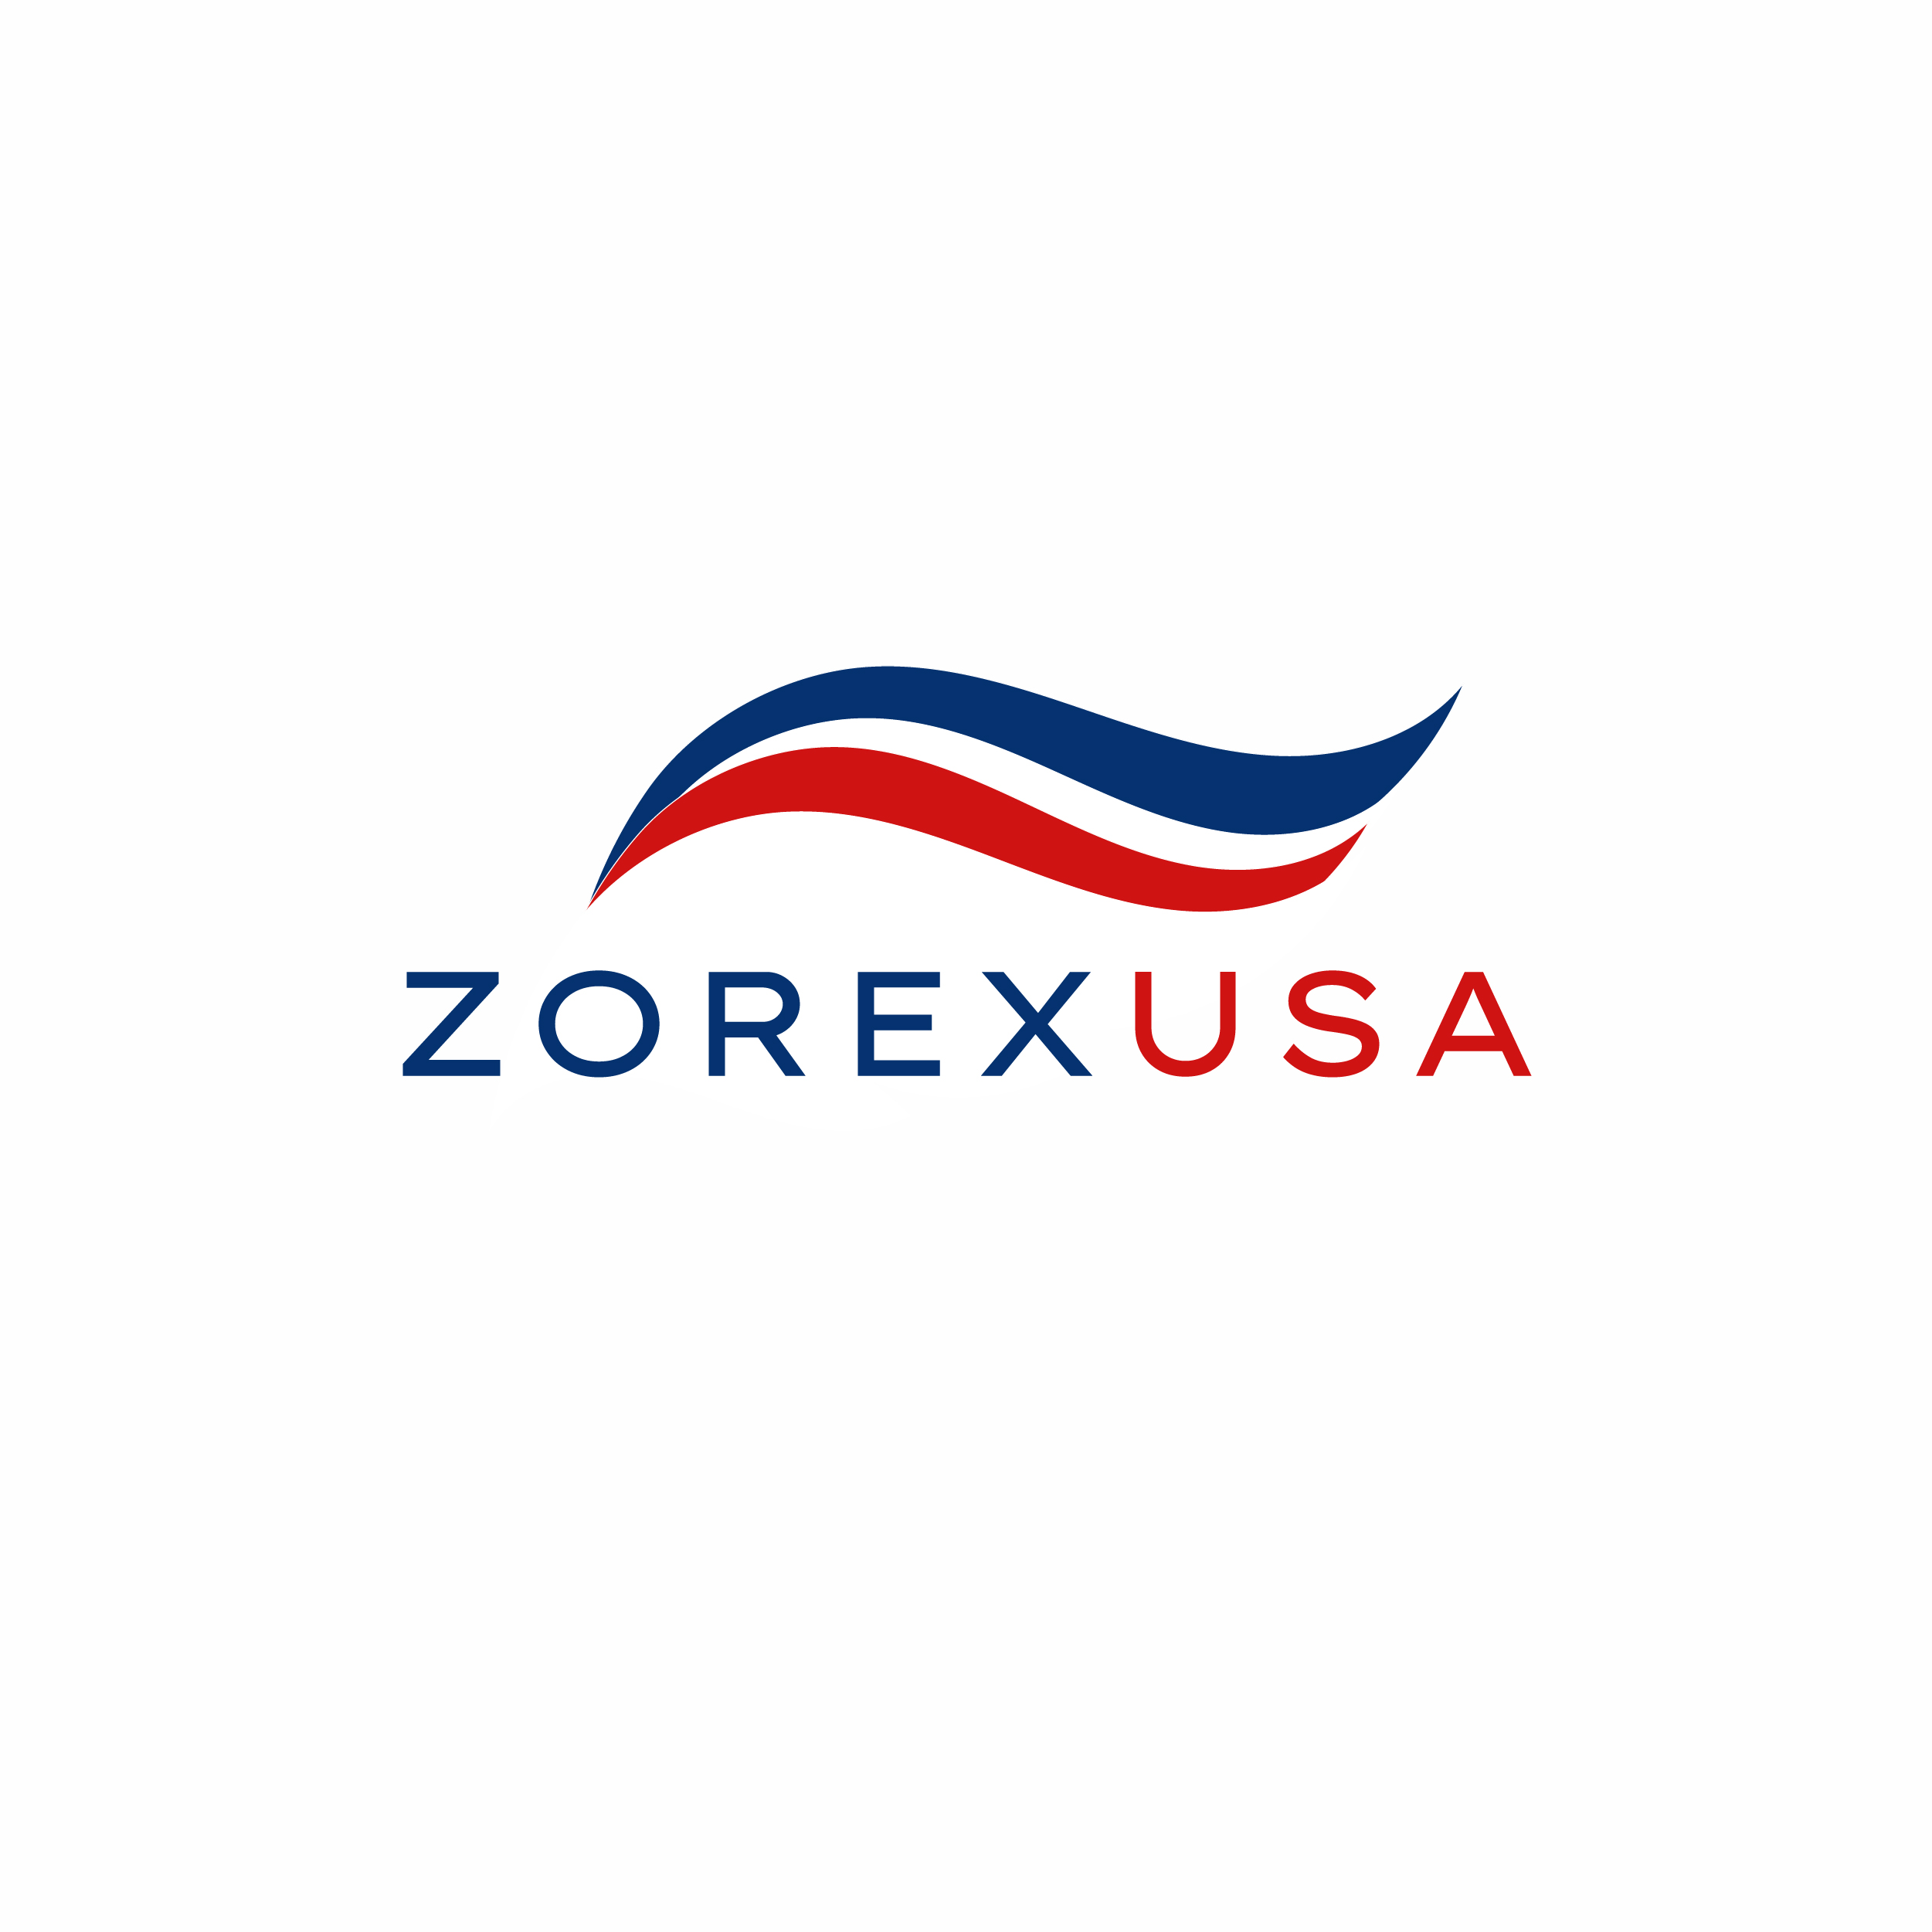 Zorex USA